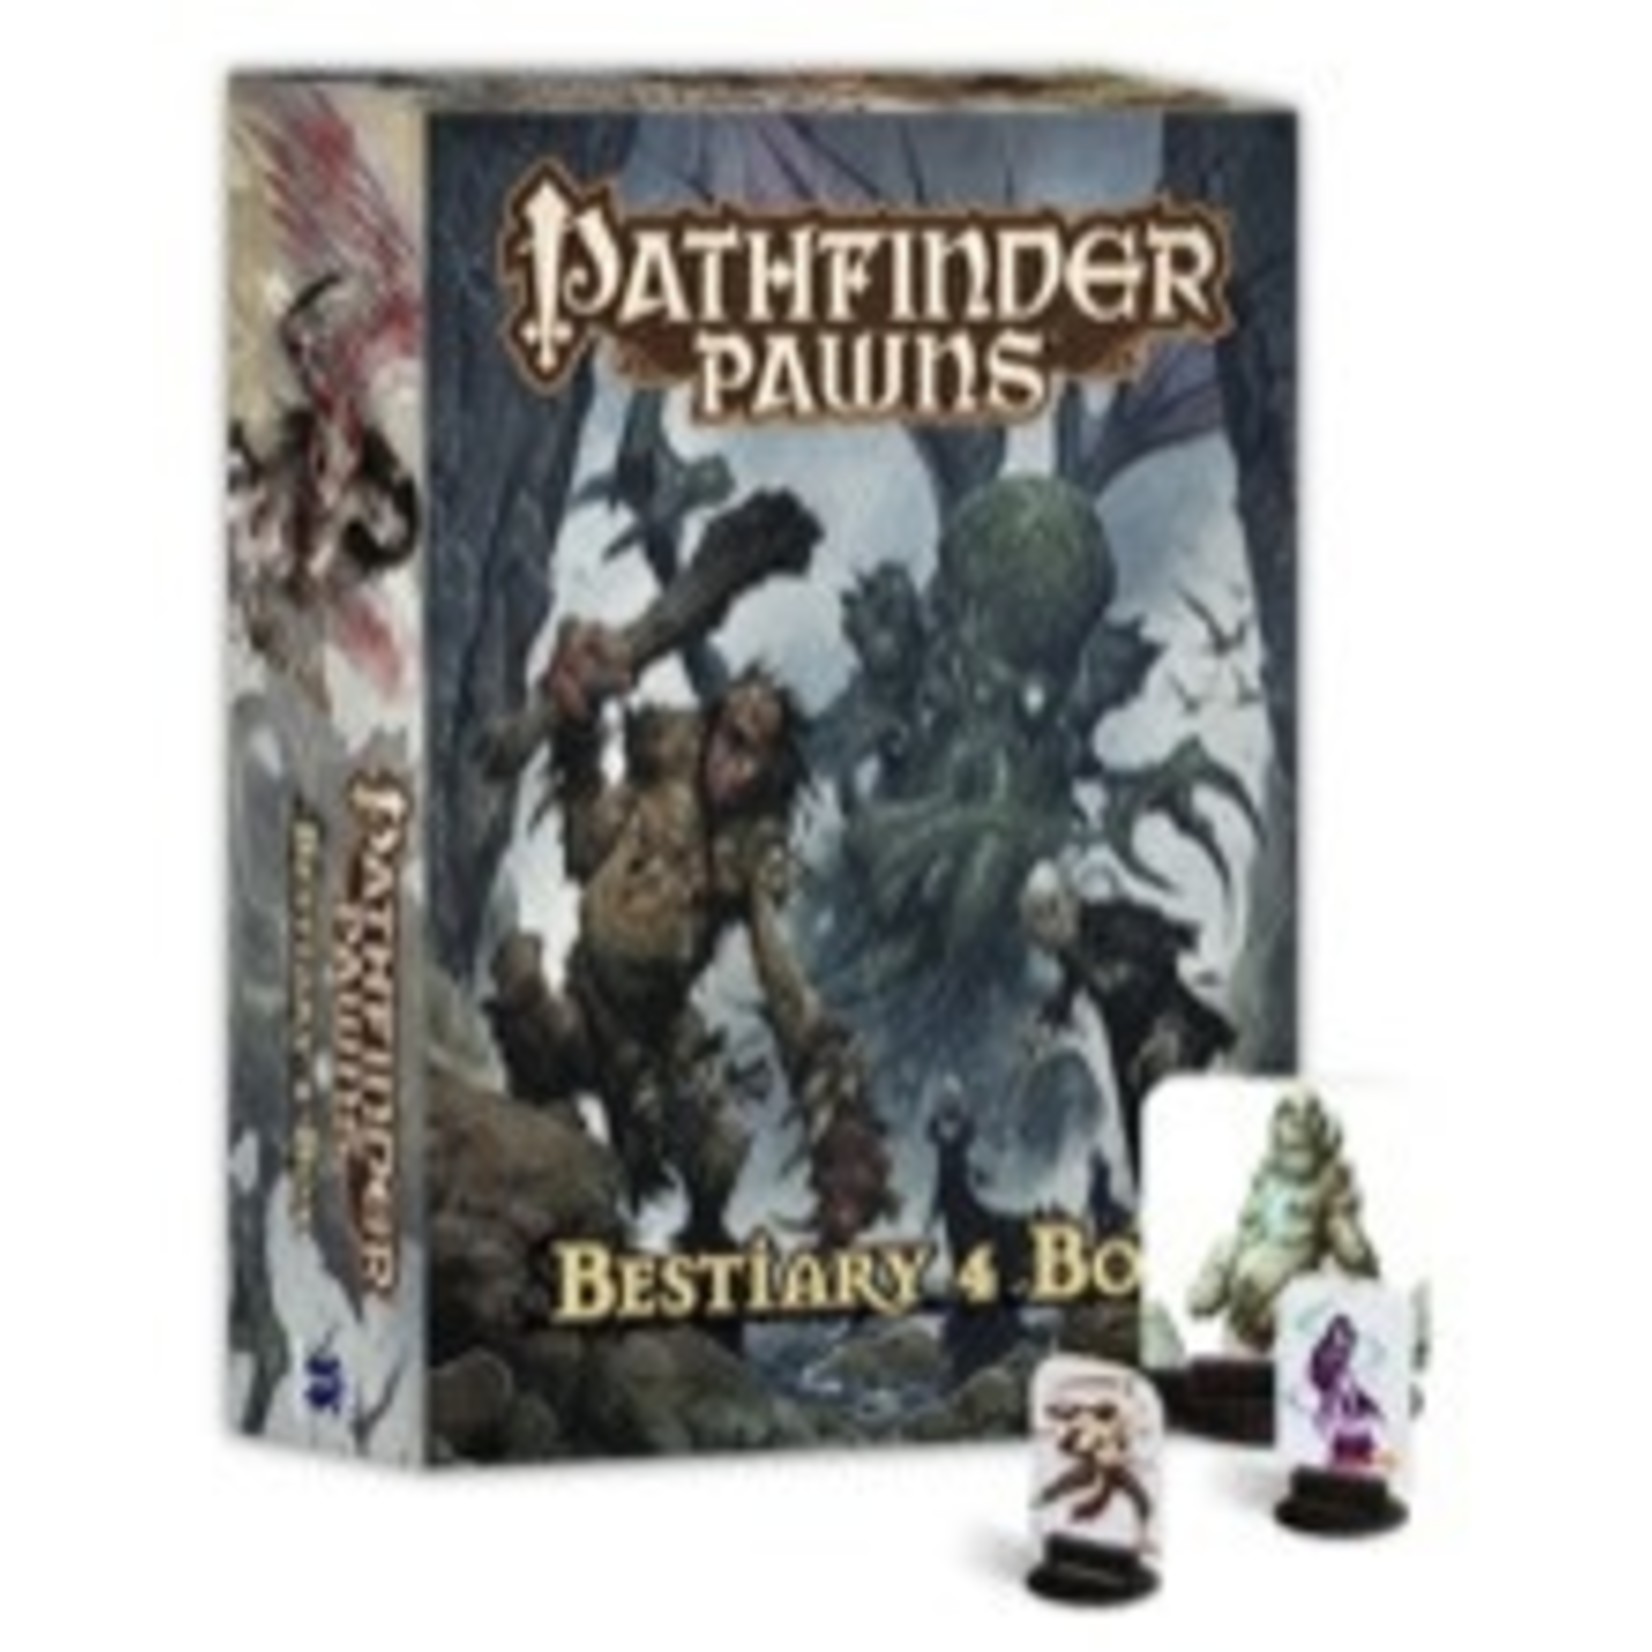 Pathfinder Pawns: Bestiary 4 Box